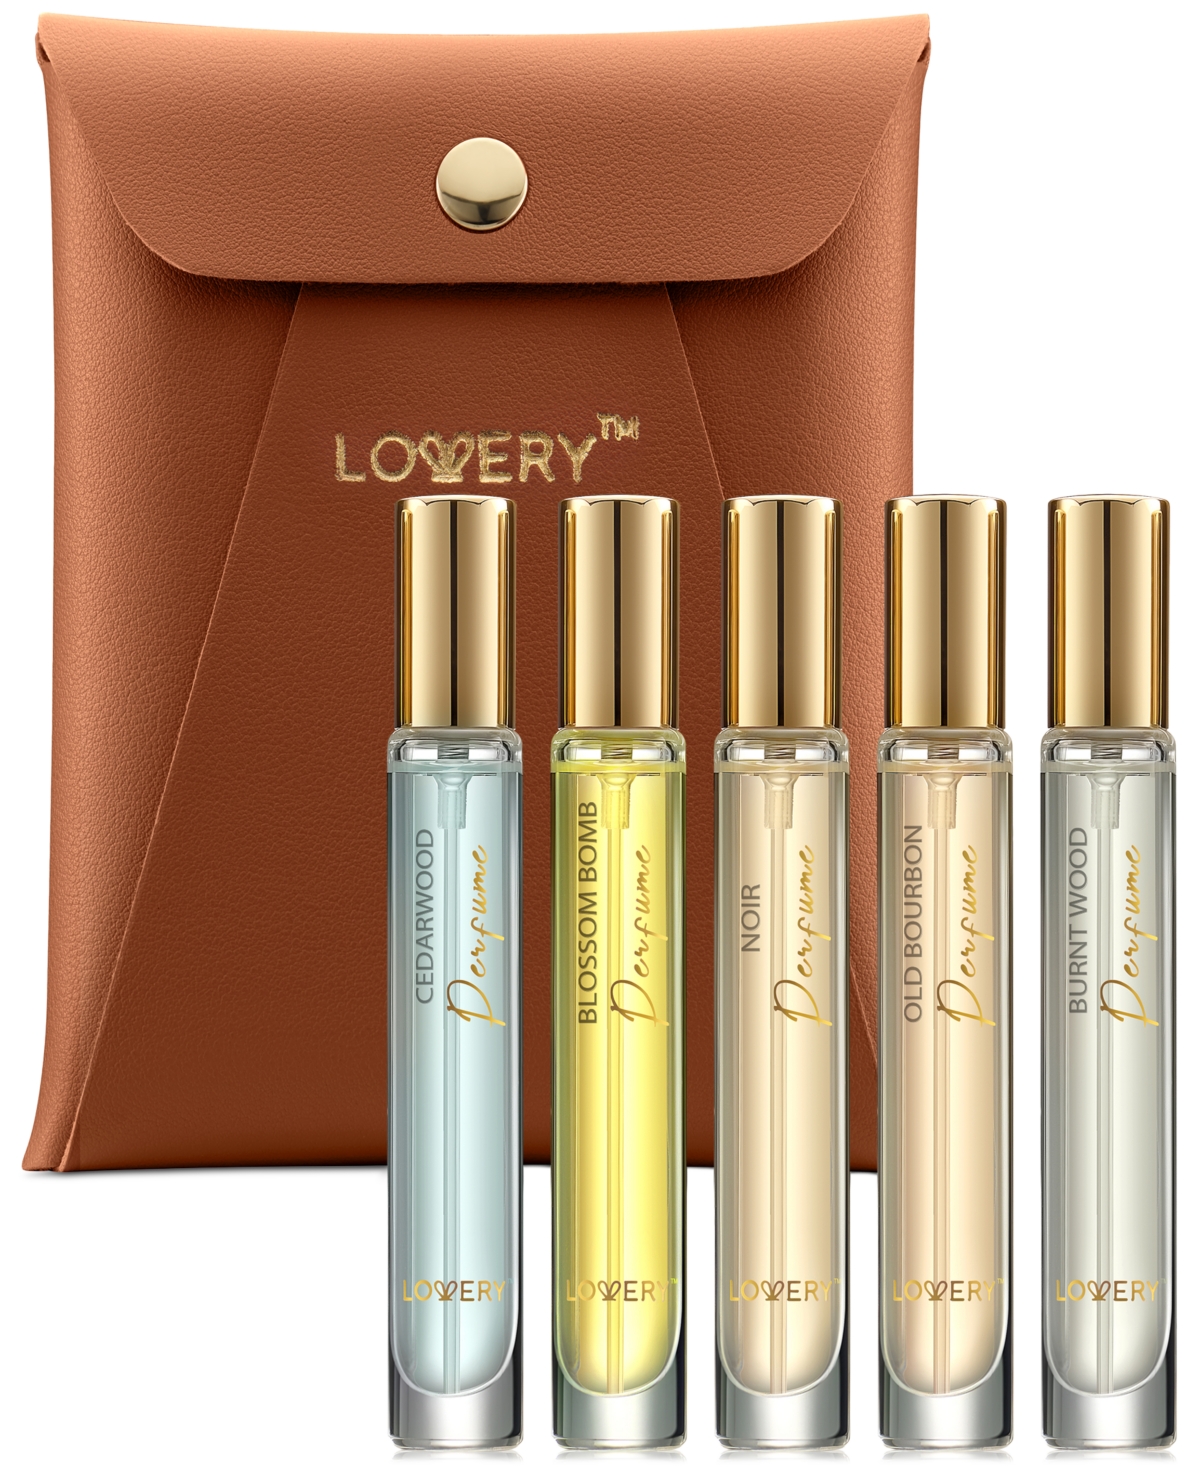 Lovery Men's 6-pc. Luxe Fragrance Gift Set